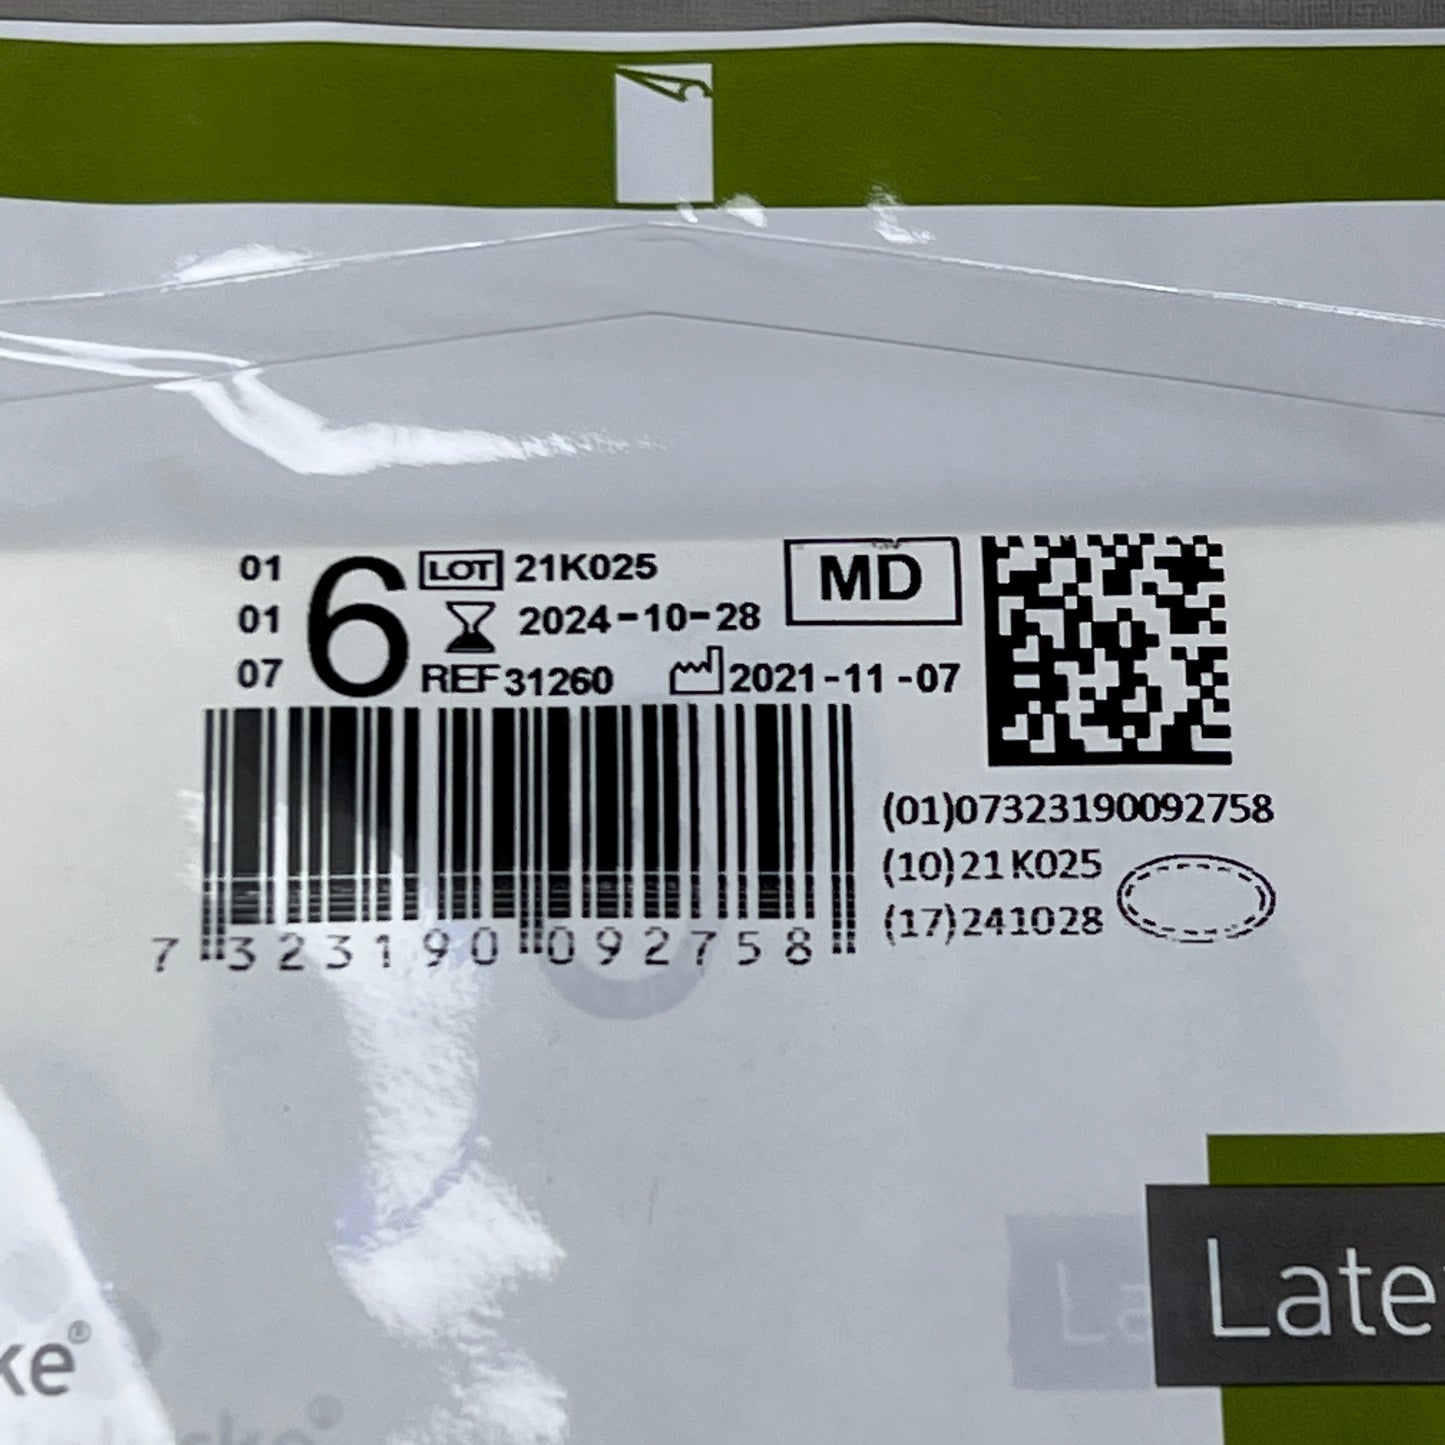 MOLNLYCKE Biogel Latex Surgical Indicator Underglove SZ 6 Green 50 Pairs 31260 (New)